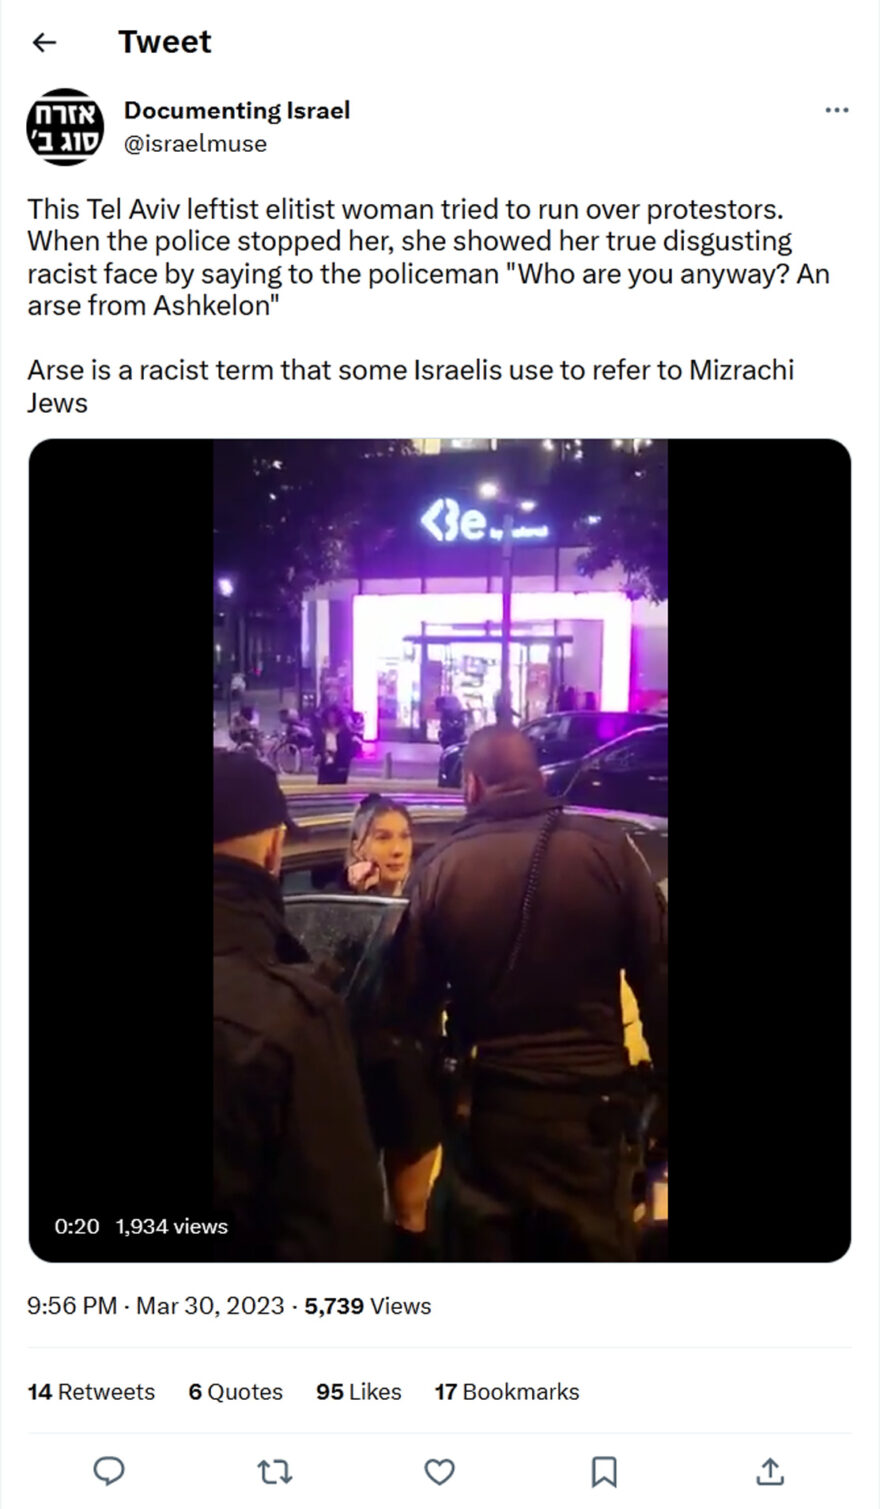 Documenting Israel-tweet-30March2023-Tel Aviv leftist elitist woman tried to run over protestors